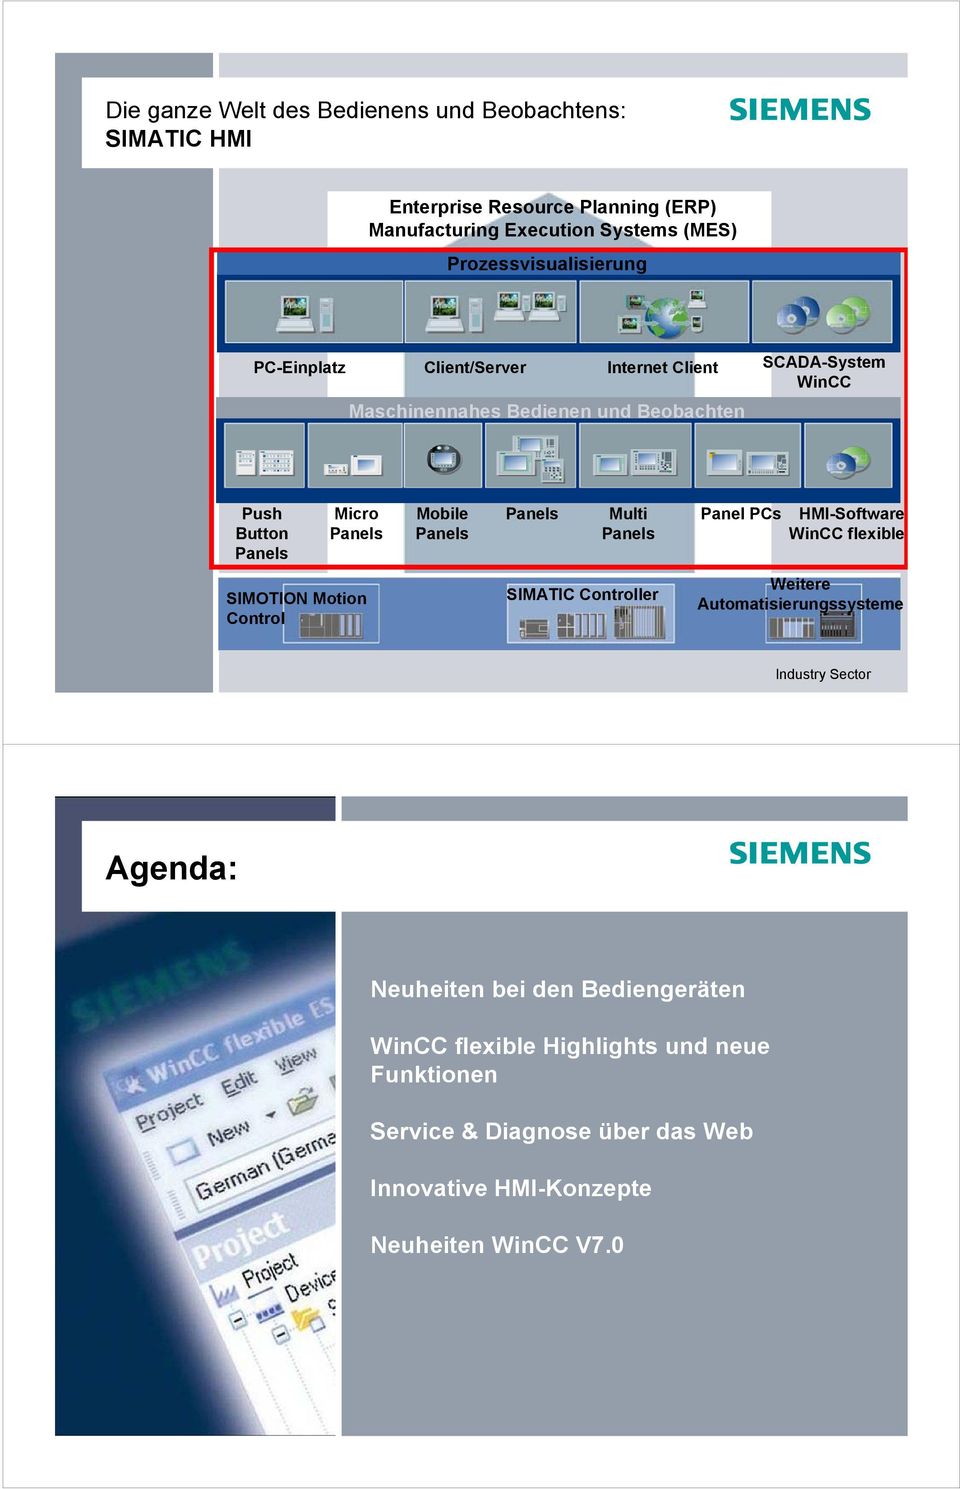 Bedienen und Beobachten Push Button Panels Micro Panels Mobile Panels Panels Multi Panels Panel PCs HMI-Software